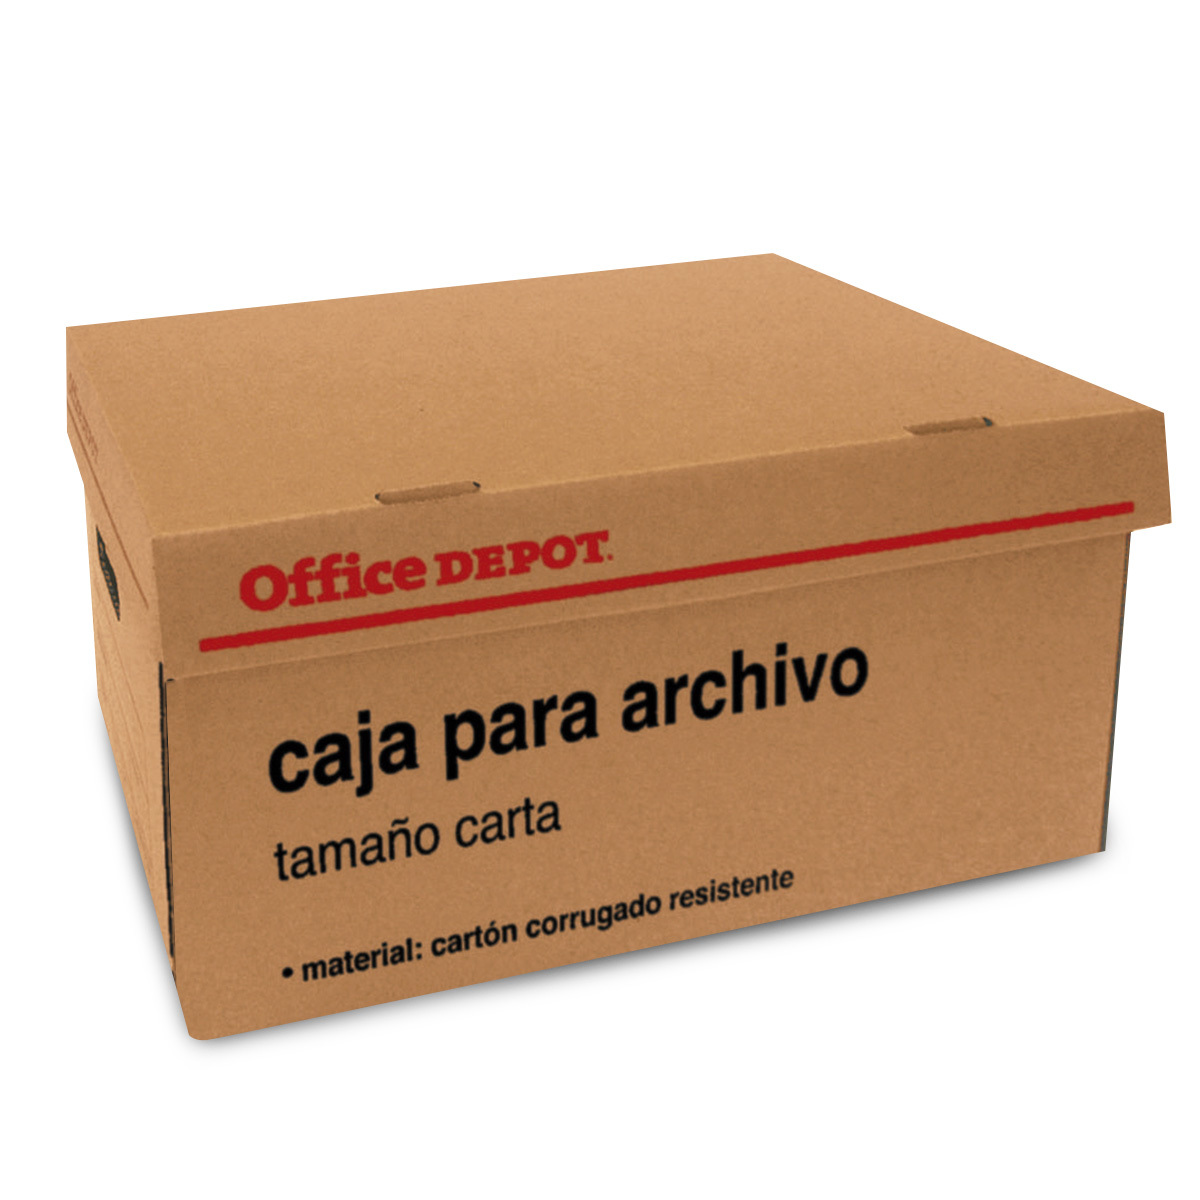 Actualizar 51+ imagen office depot cajas para archivo